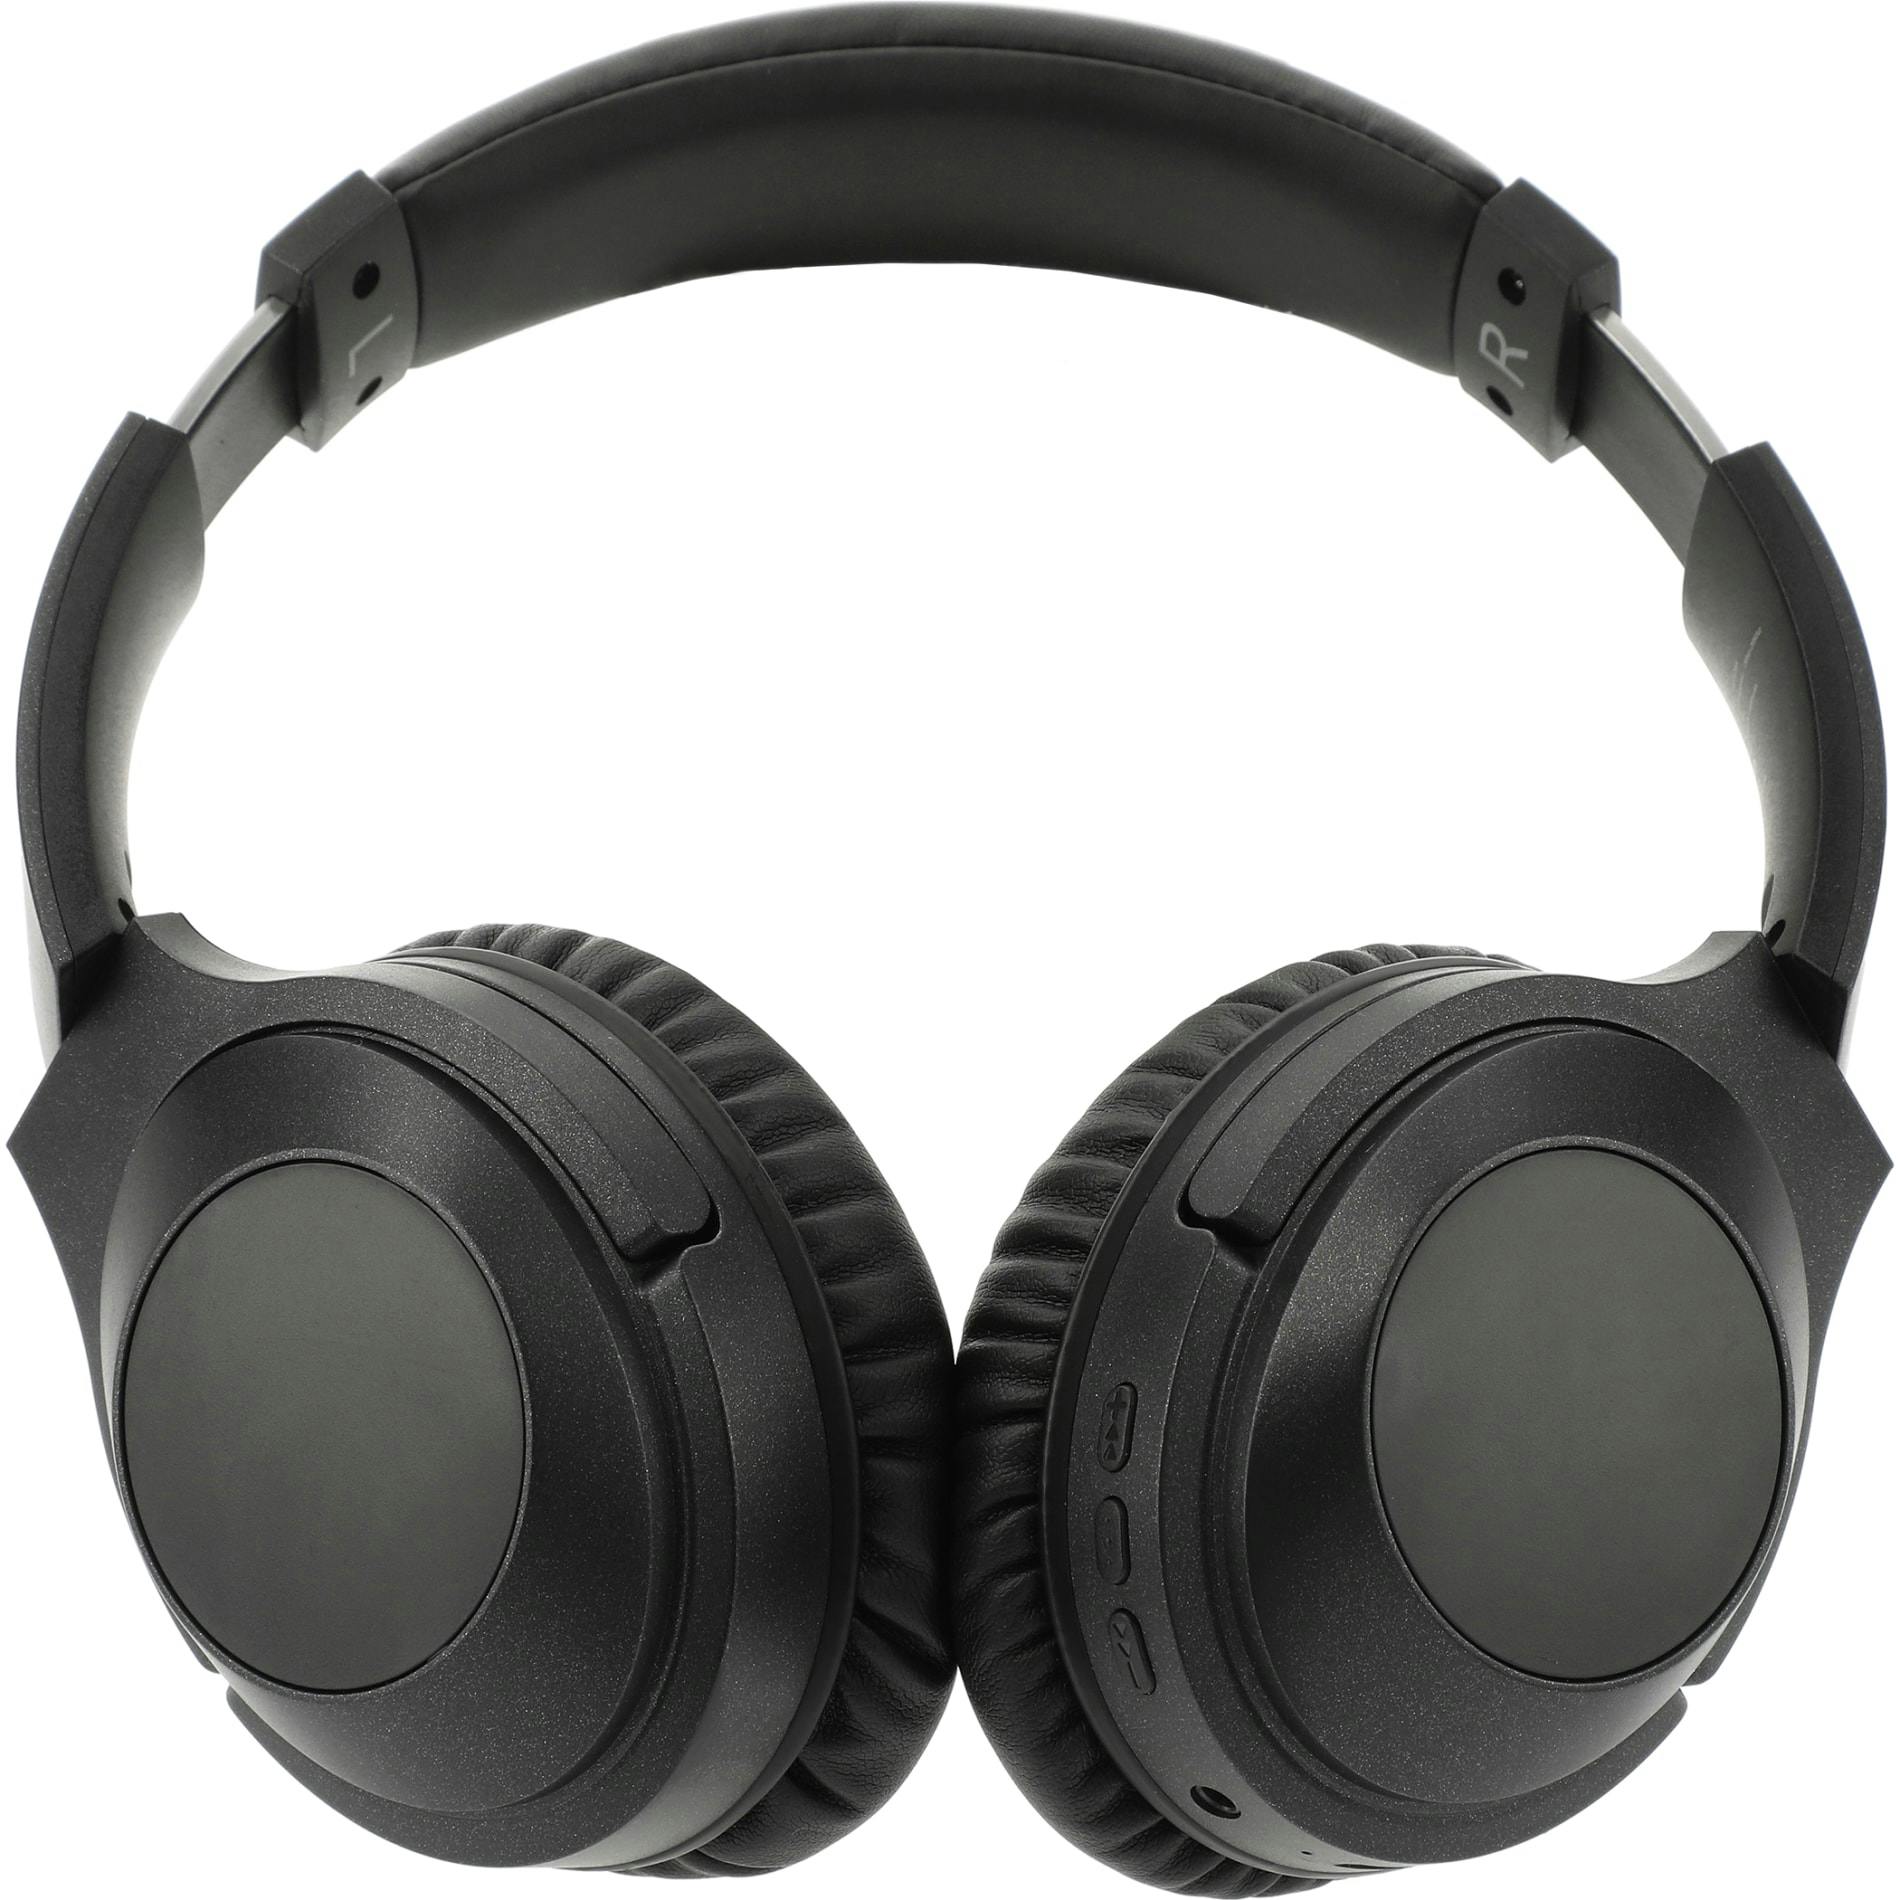 Hush Active Noise Cancellation Bluetooth Headphone - additional Image 7